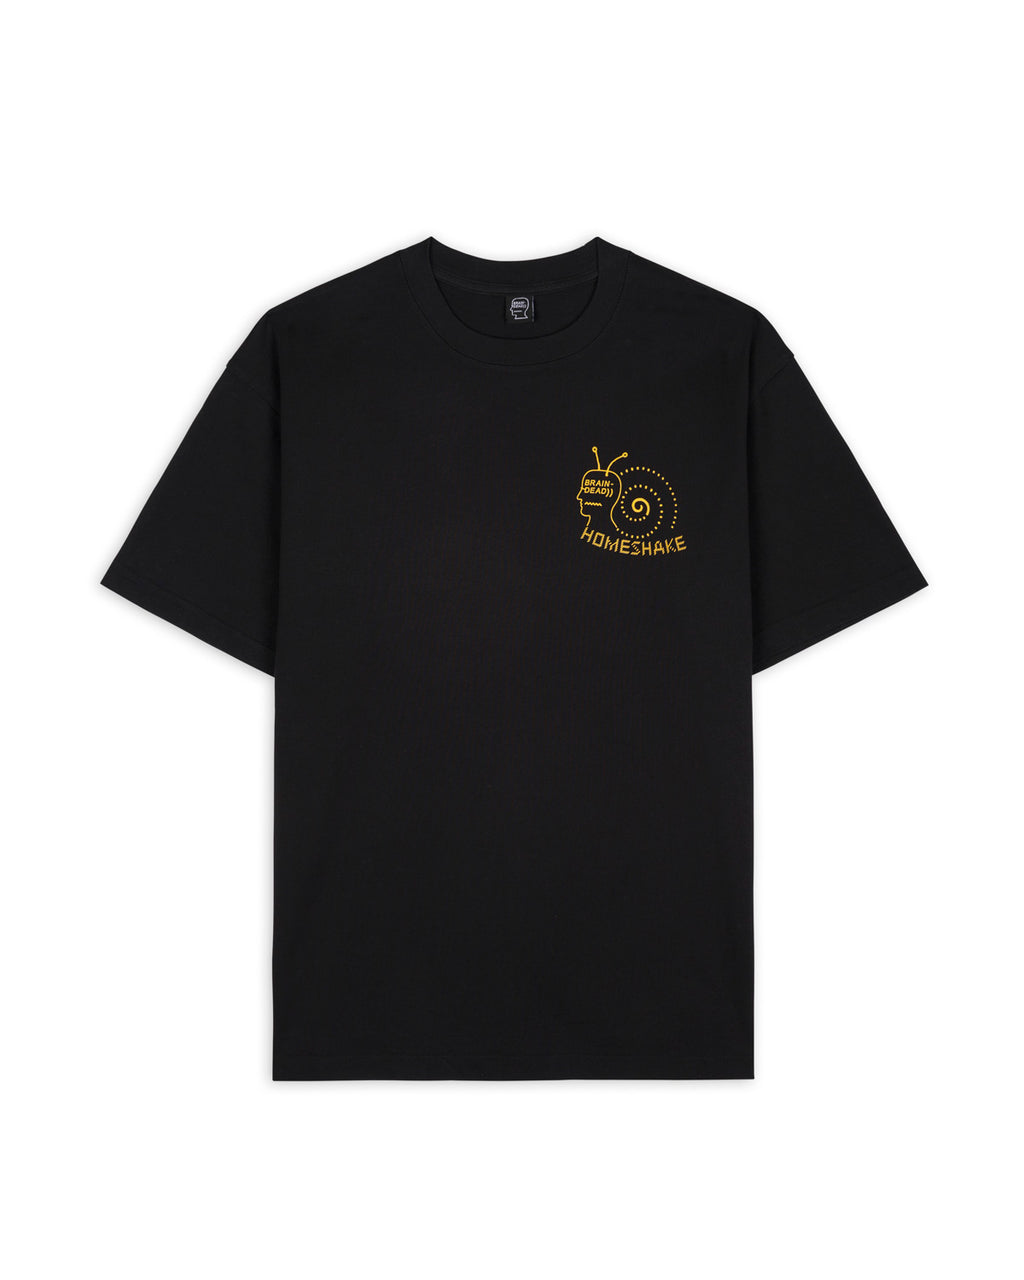 Brain Dead x Homeshake "Pareidolia Catalog" T-Shirt - Black